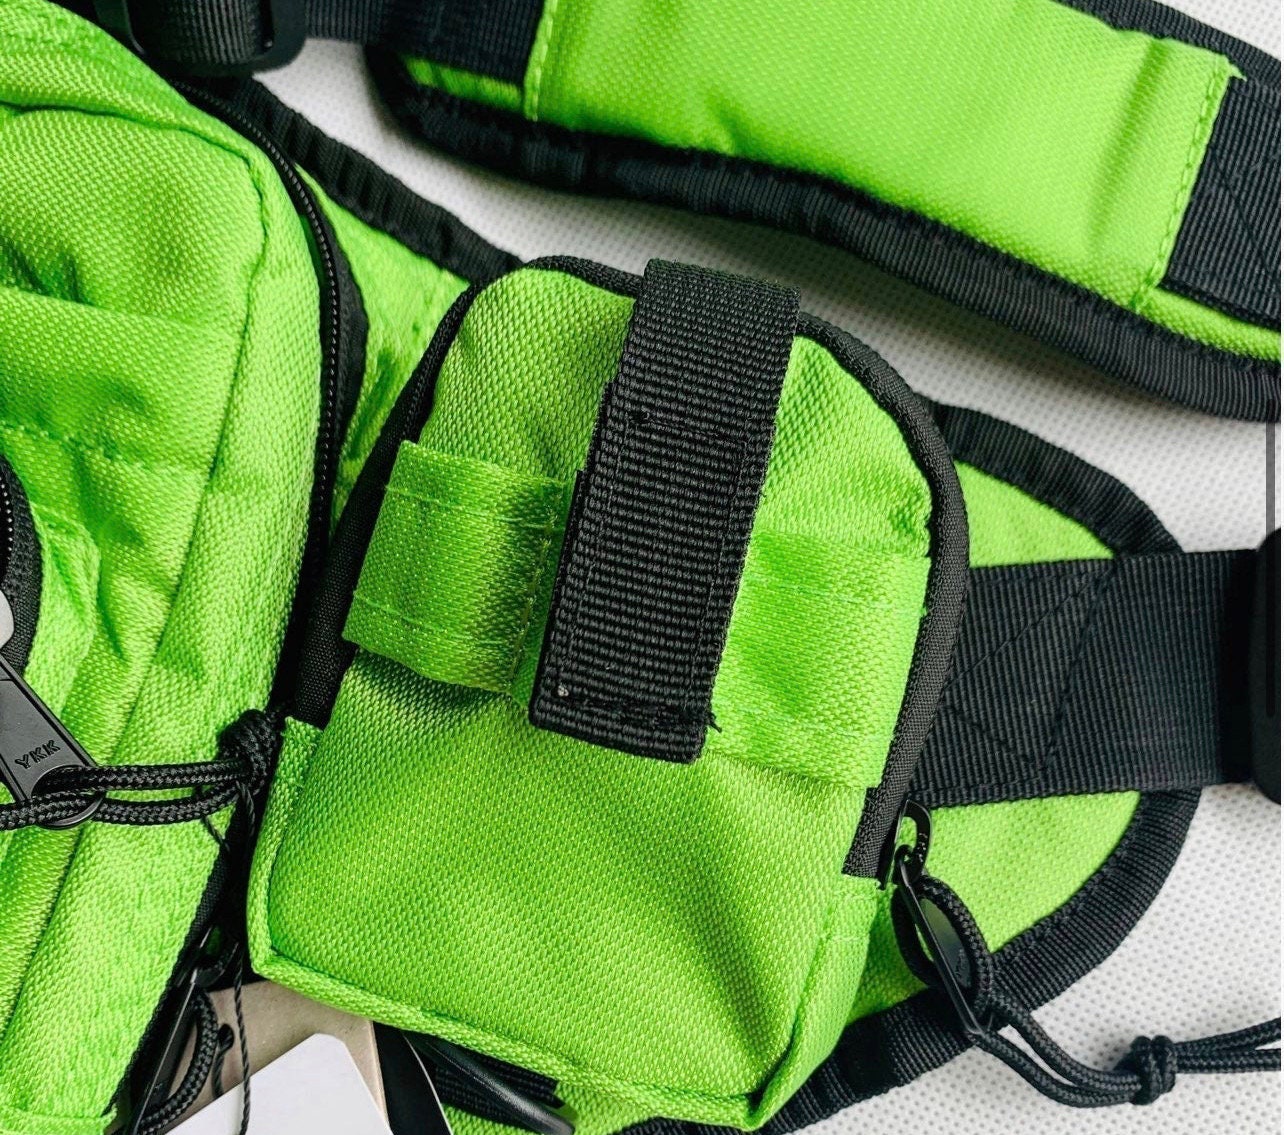 Carhartt Delta Bag Black Tactical Shoulder Bag Water Resistant 